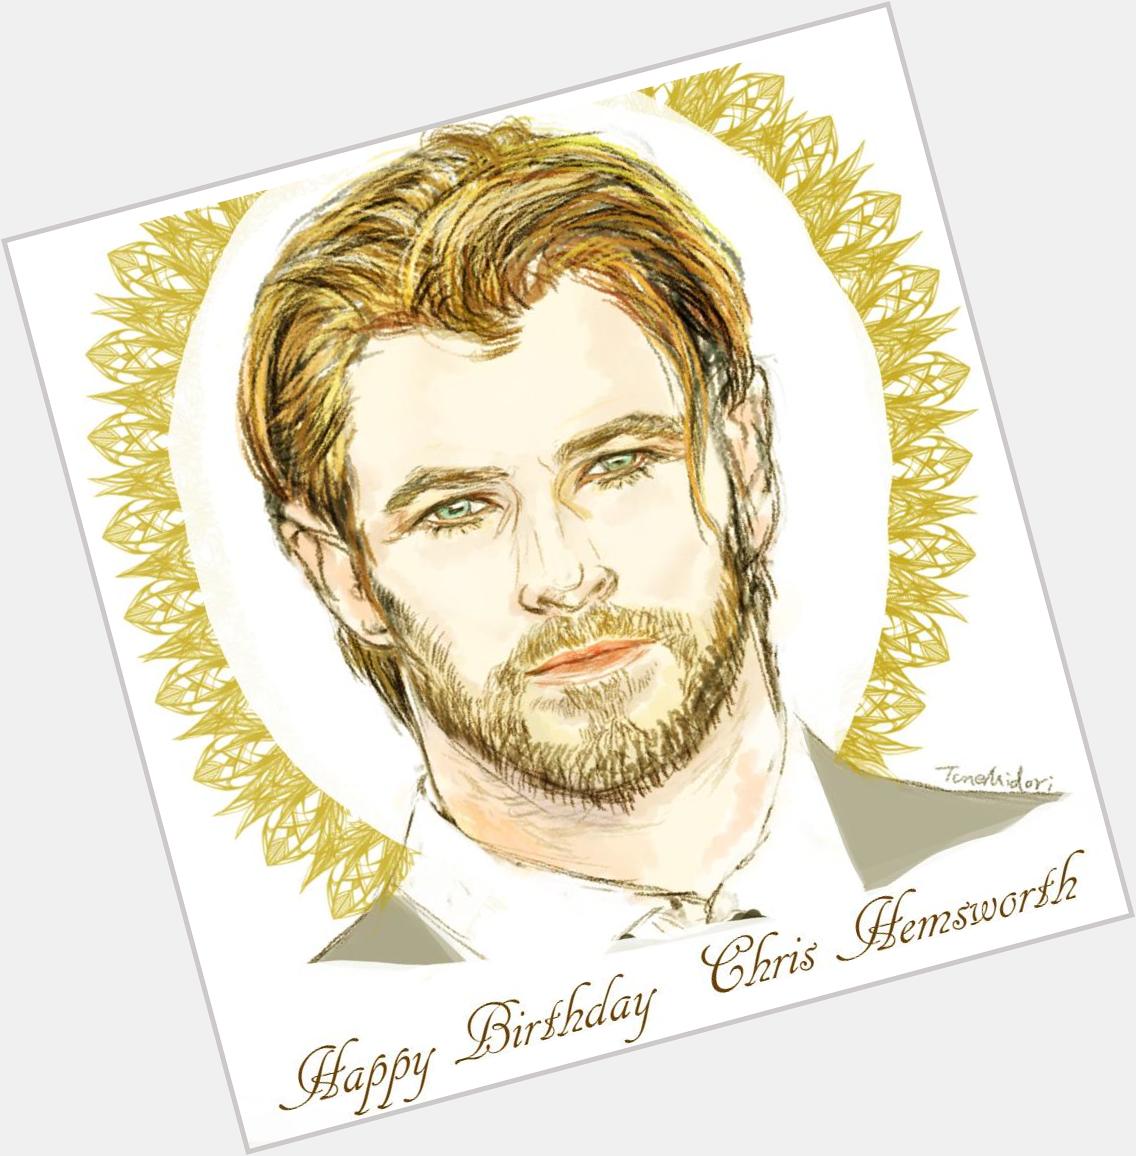 Happy Birthday Chris Hemsworth!/                      